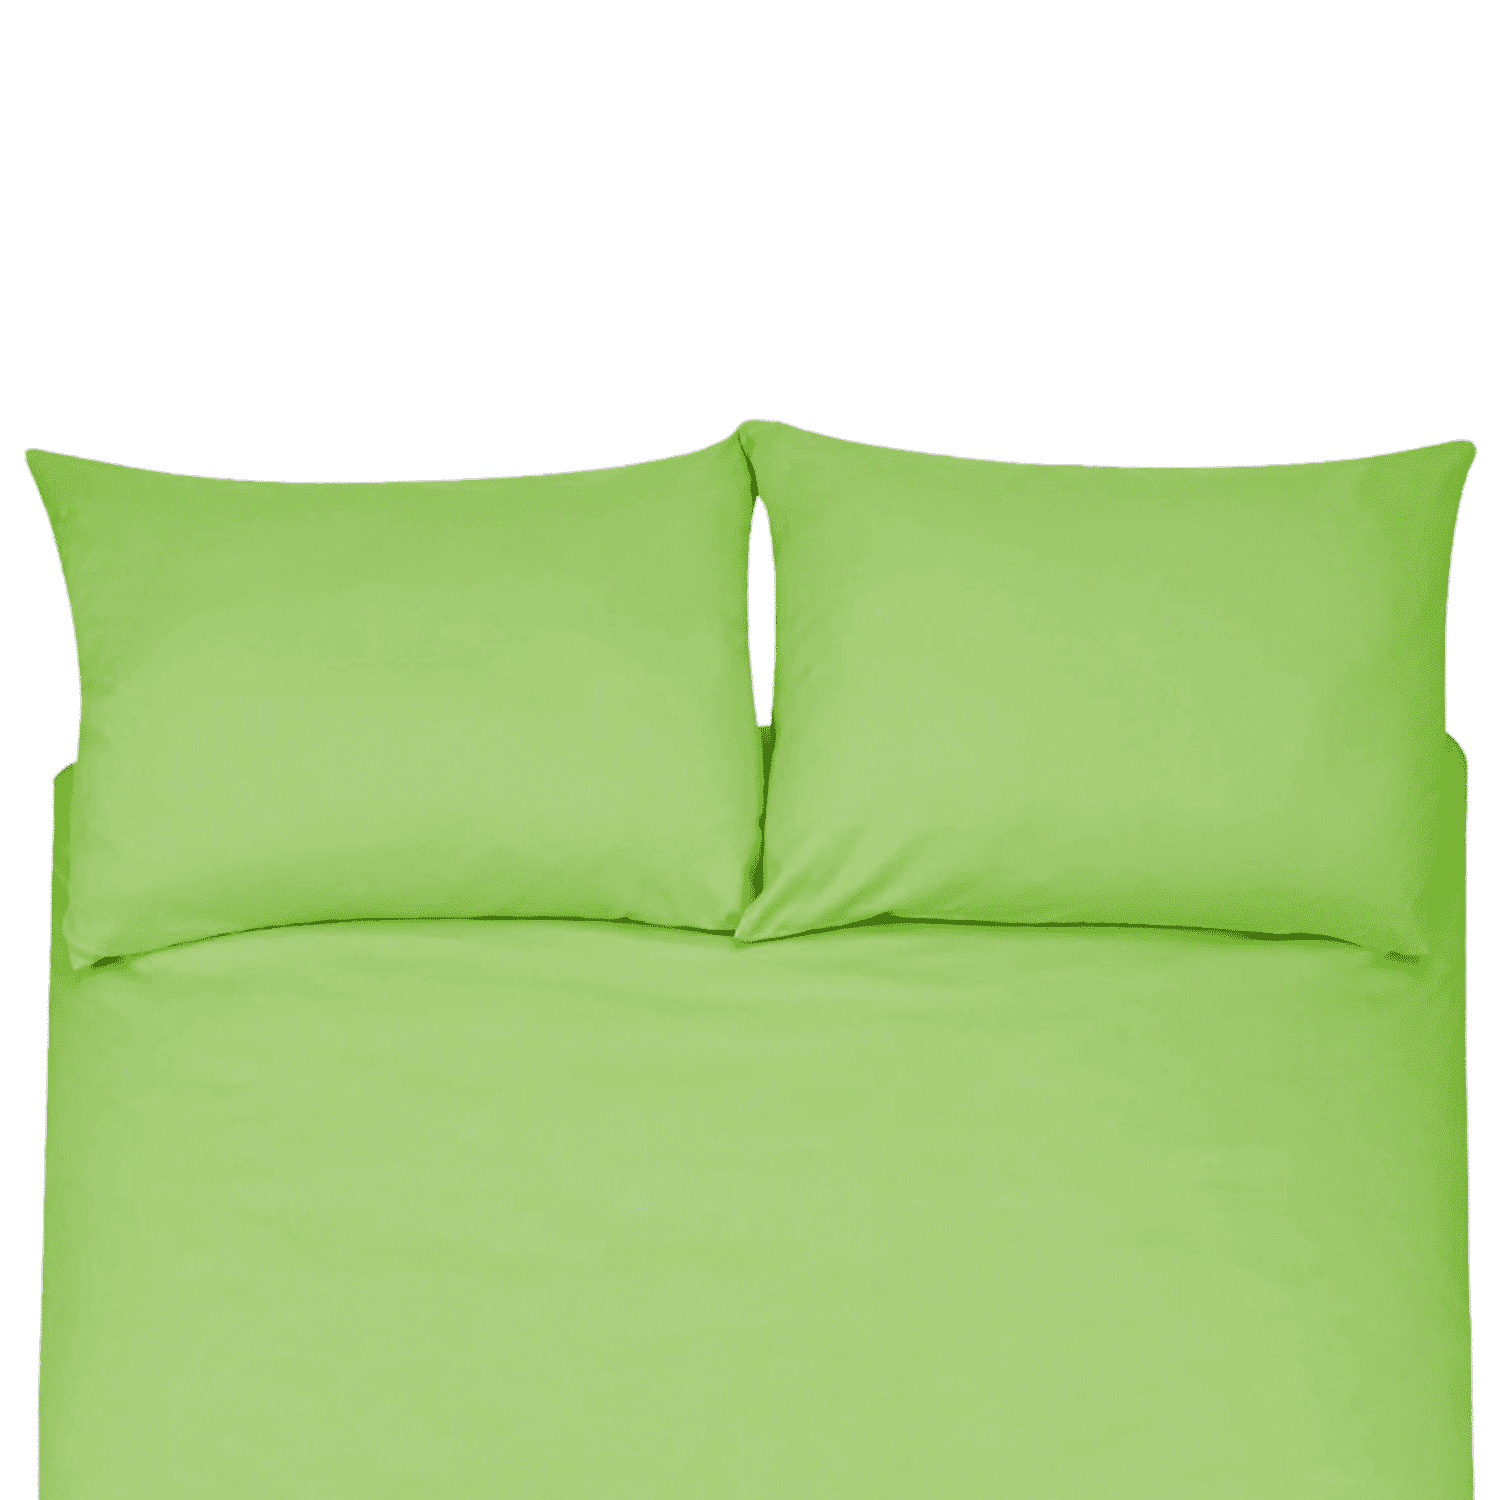 Completo-lenzuola-verde-colors-100-fibra-naturale-cotone-120-gr-tinta-unita-1-piazza-½-francese-2-piazze-oekotex